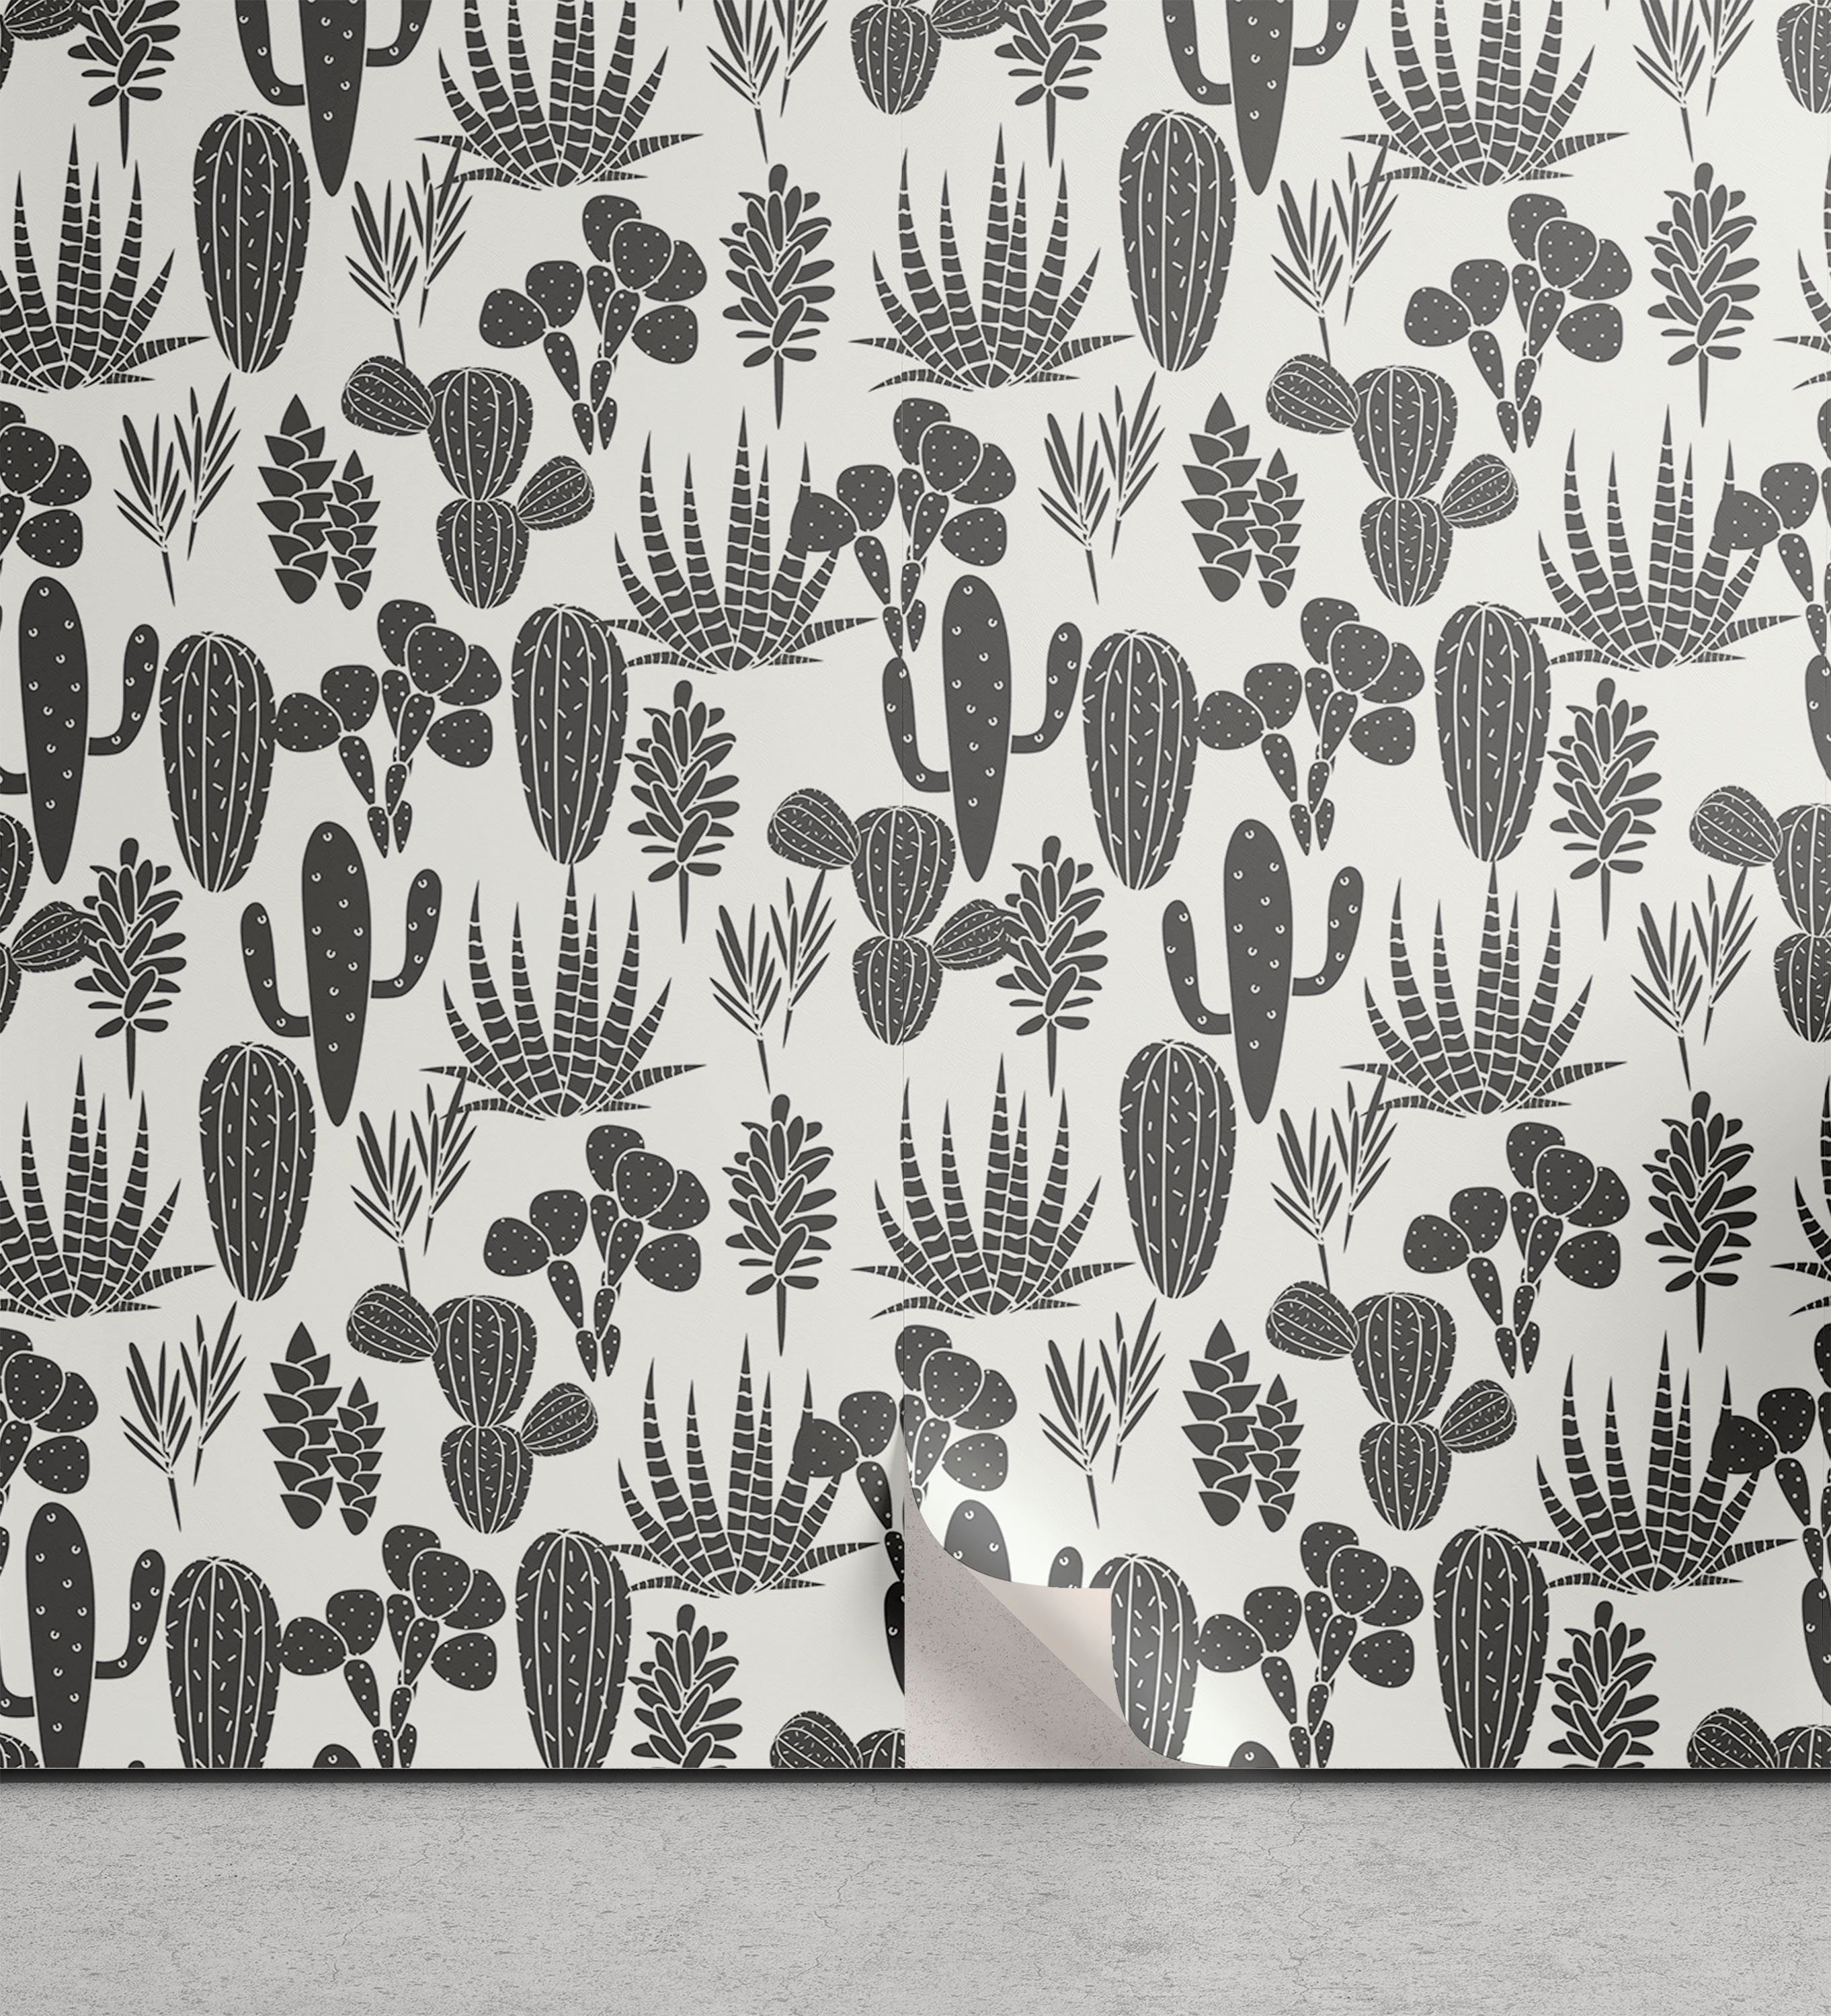 Abakuhaus Vinyltapete selbstklebendes Wohnzimmer Küchenakzent, Kaktus Cacti Pflanze Graustufen